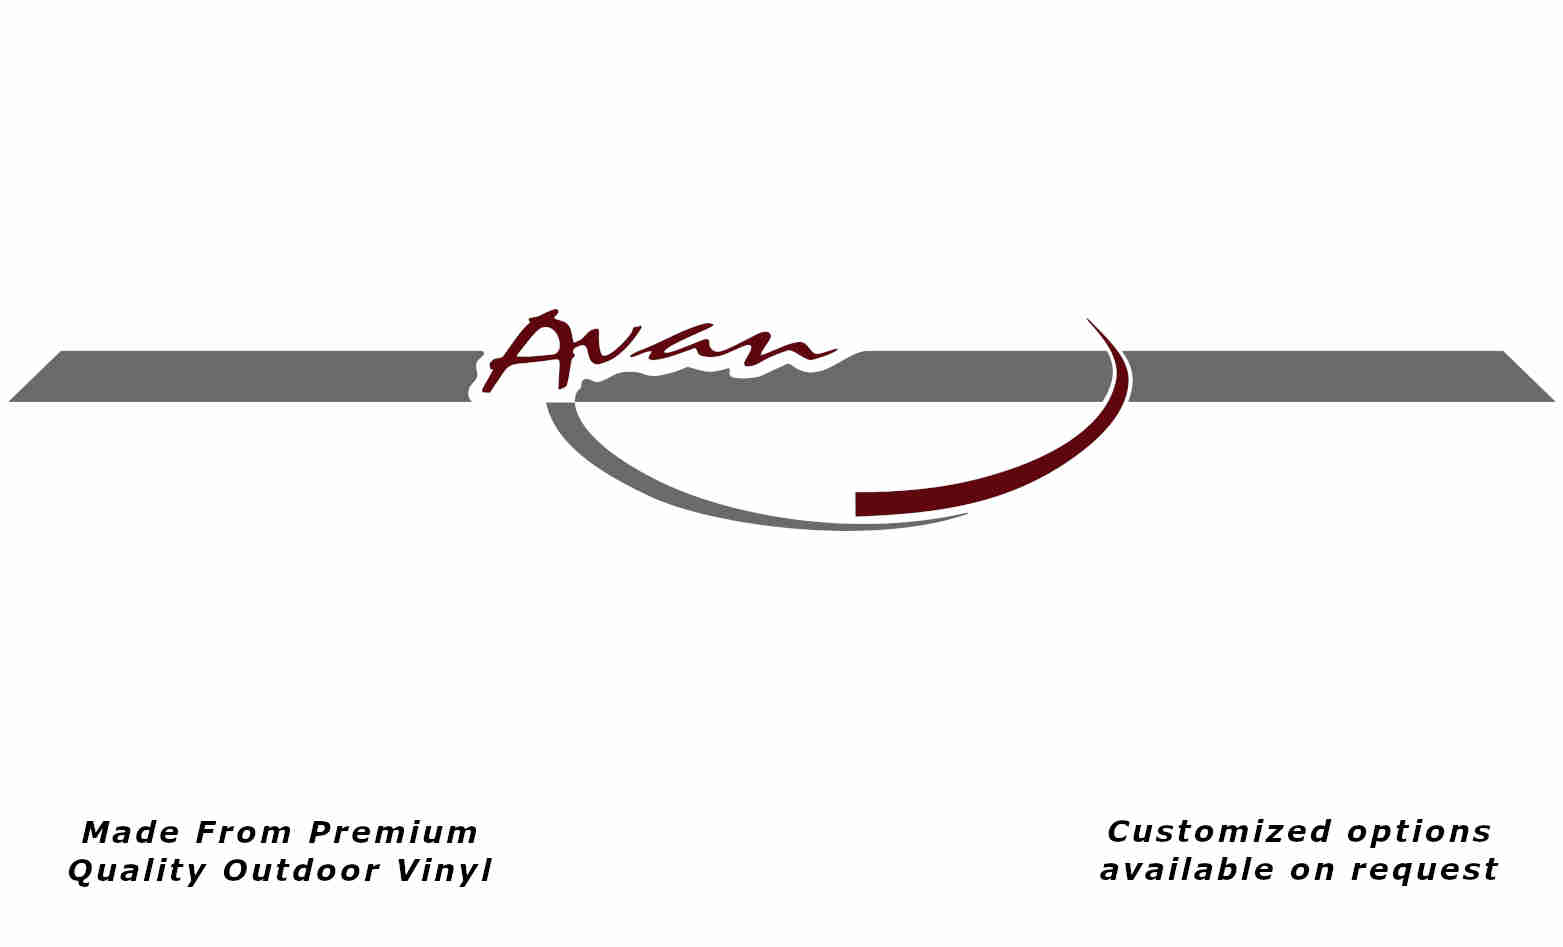 Avan 2002-2003 front caravan replacement vinyl decal sticker in silver grey and purple red.